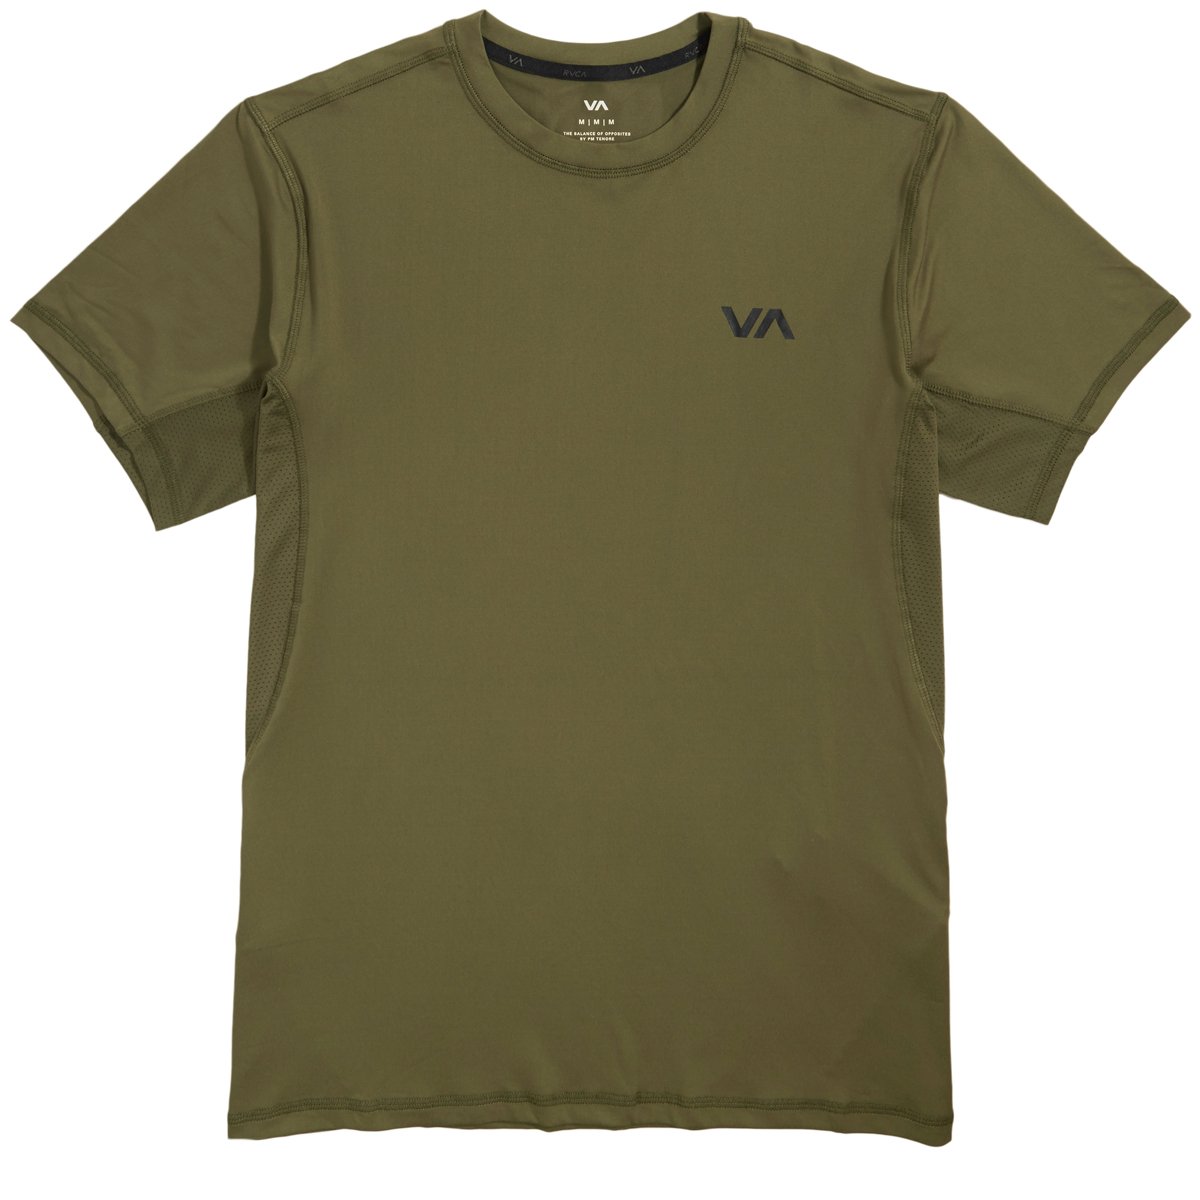 RVCA Sport Vent Shirt - Olive image 1